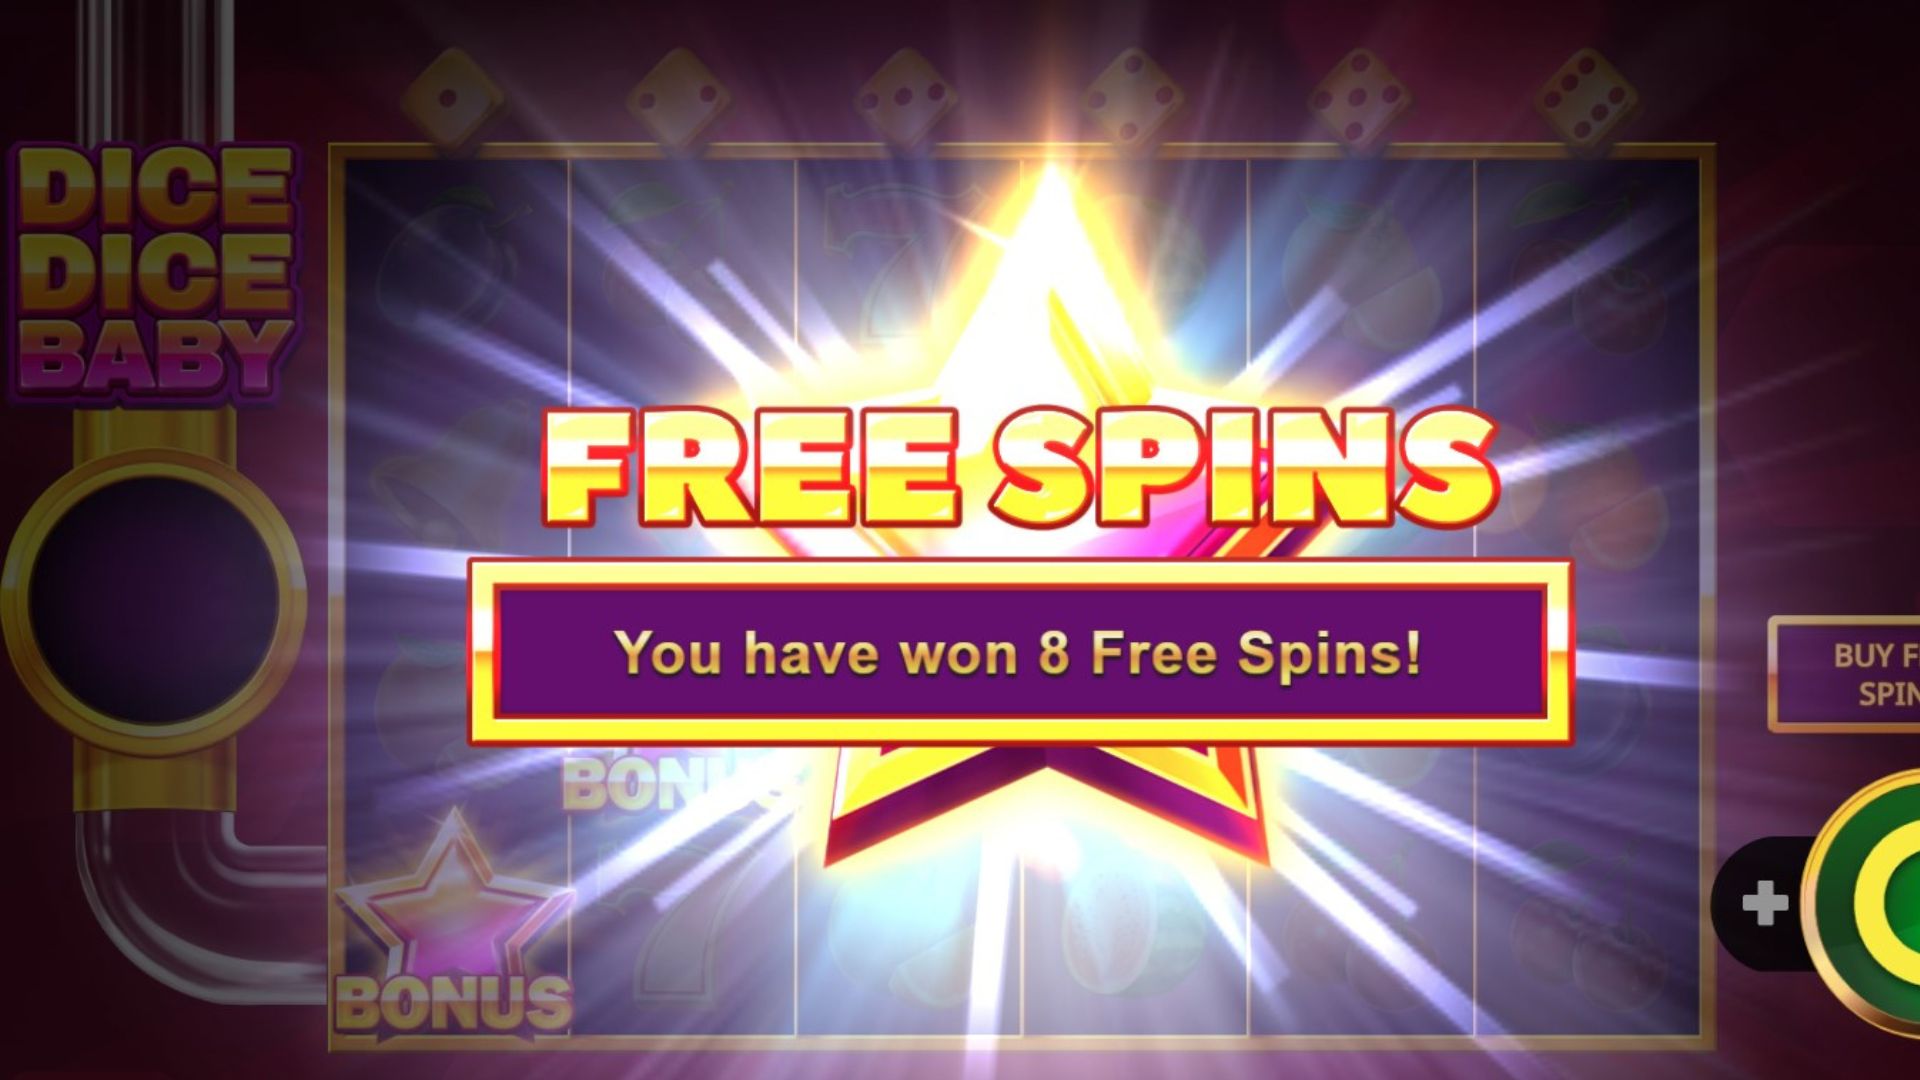 bonus freespin slot dice dice baby